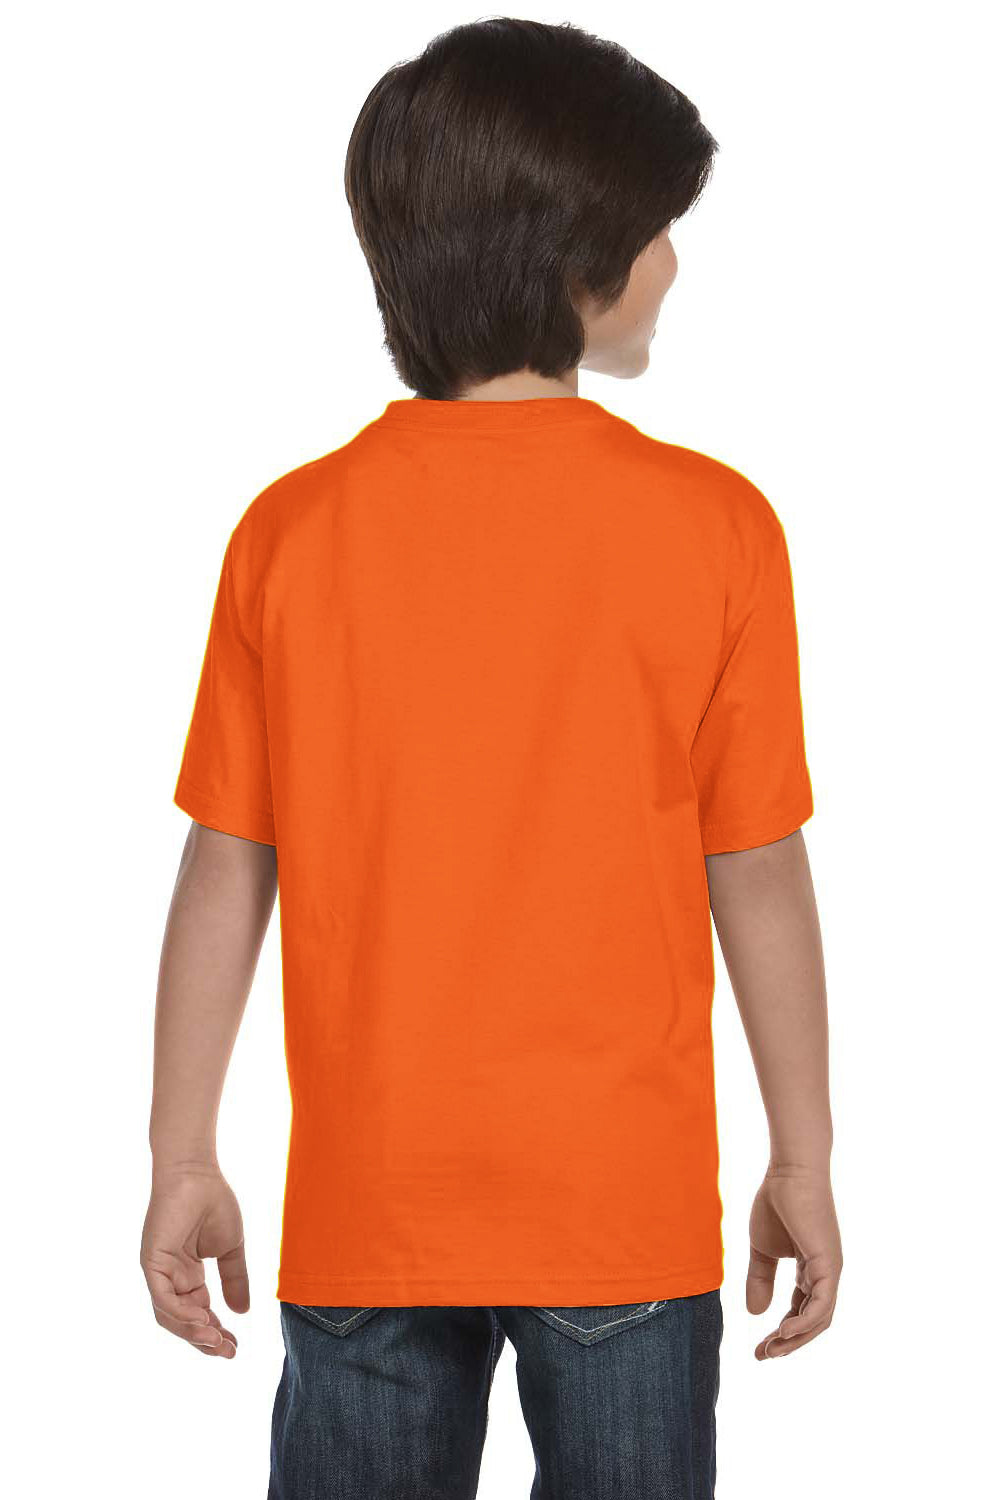 Gildan G800B Youth DryBlend Moisture Wicking Short Sleeve Crewneck T-Shirt Safety Orange Back